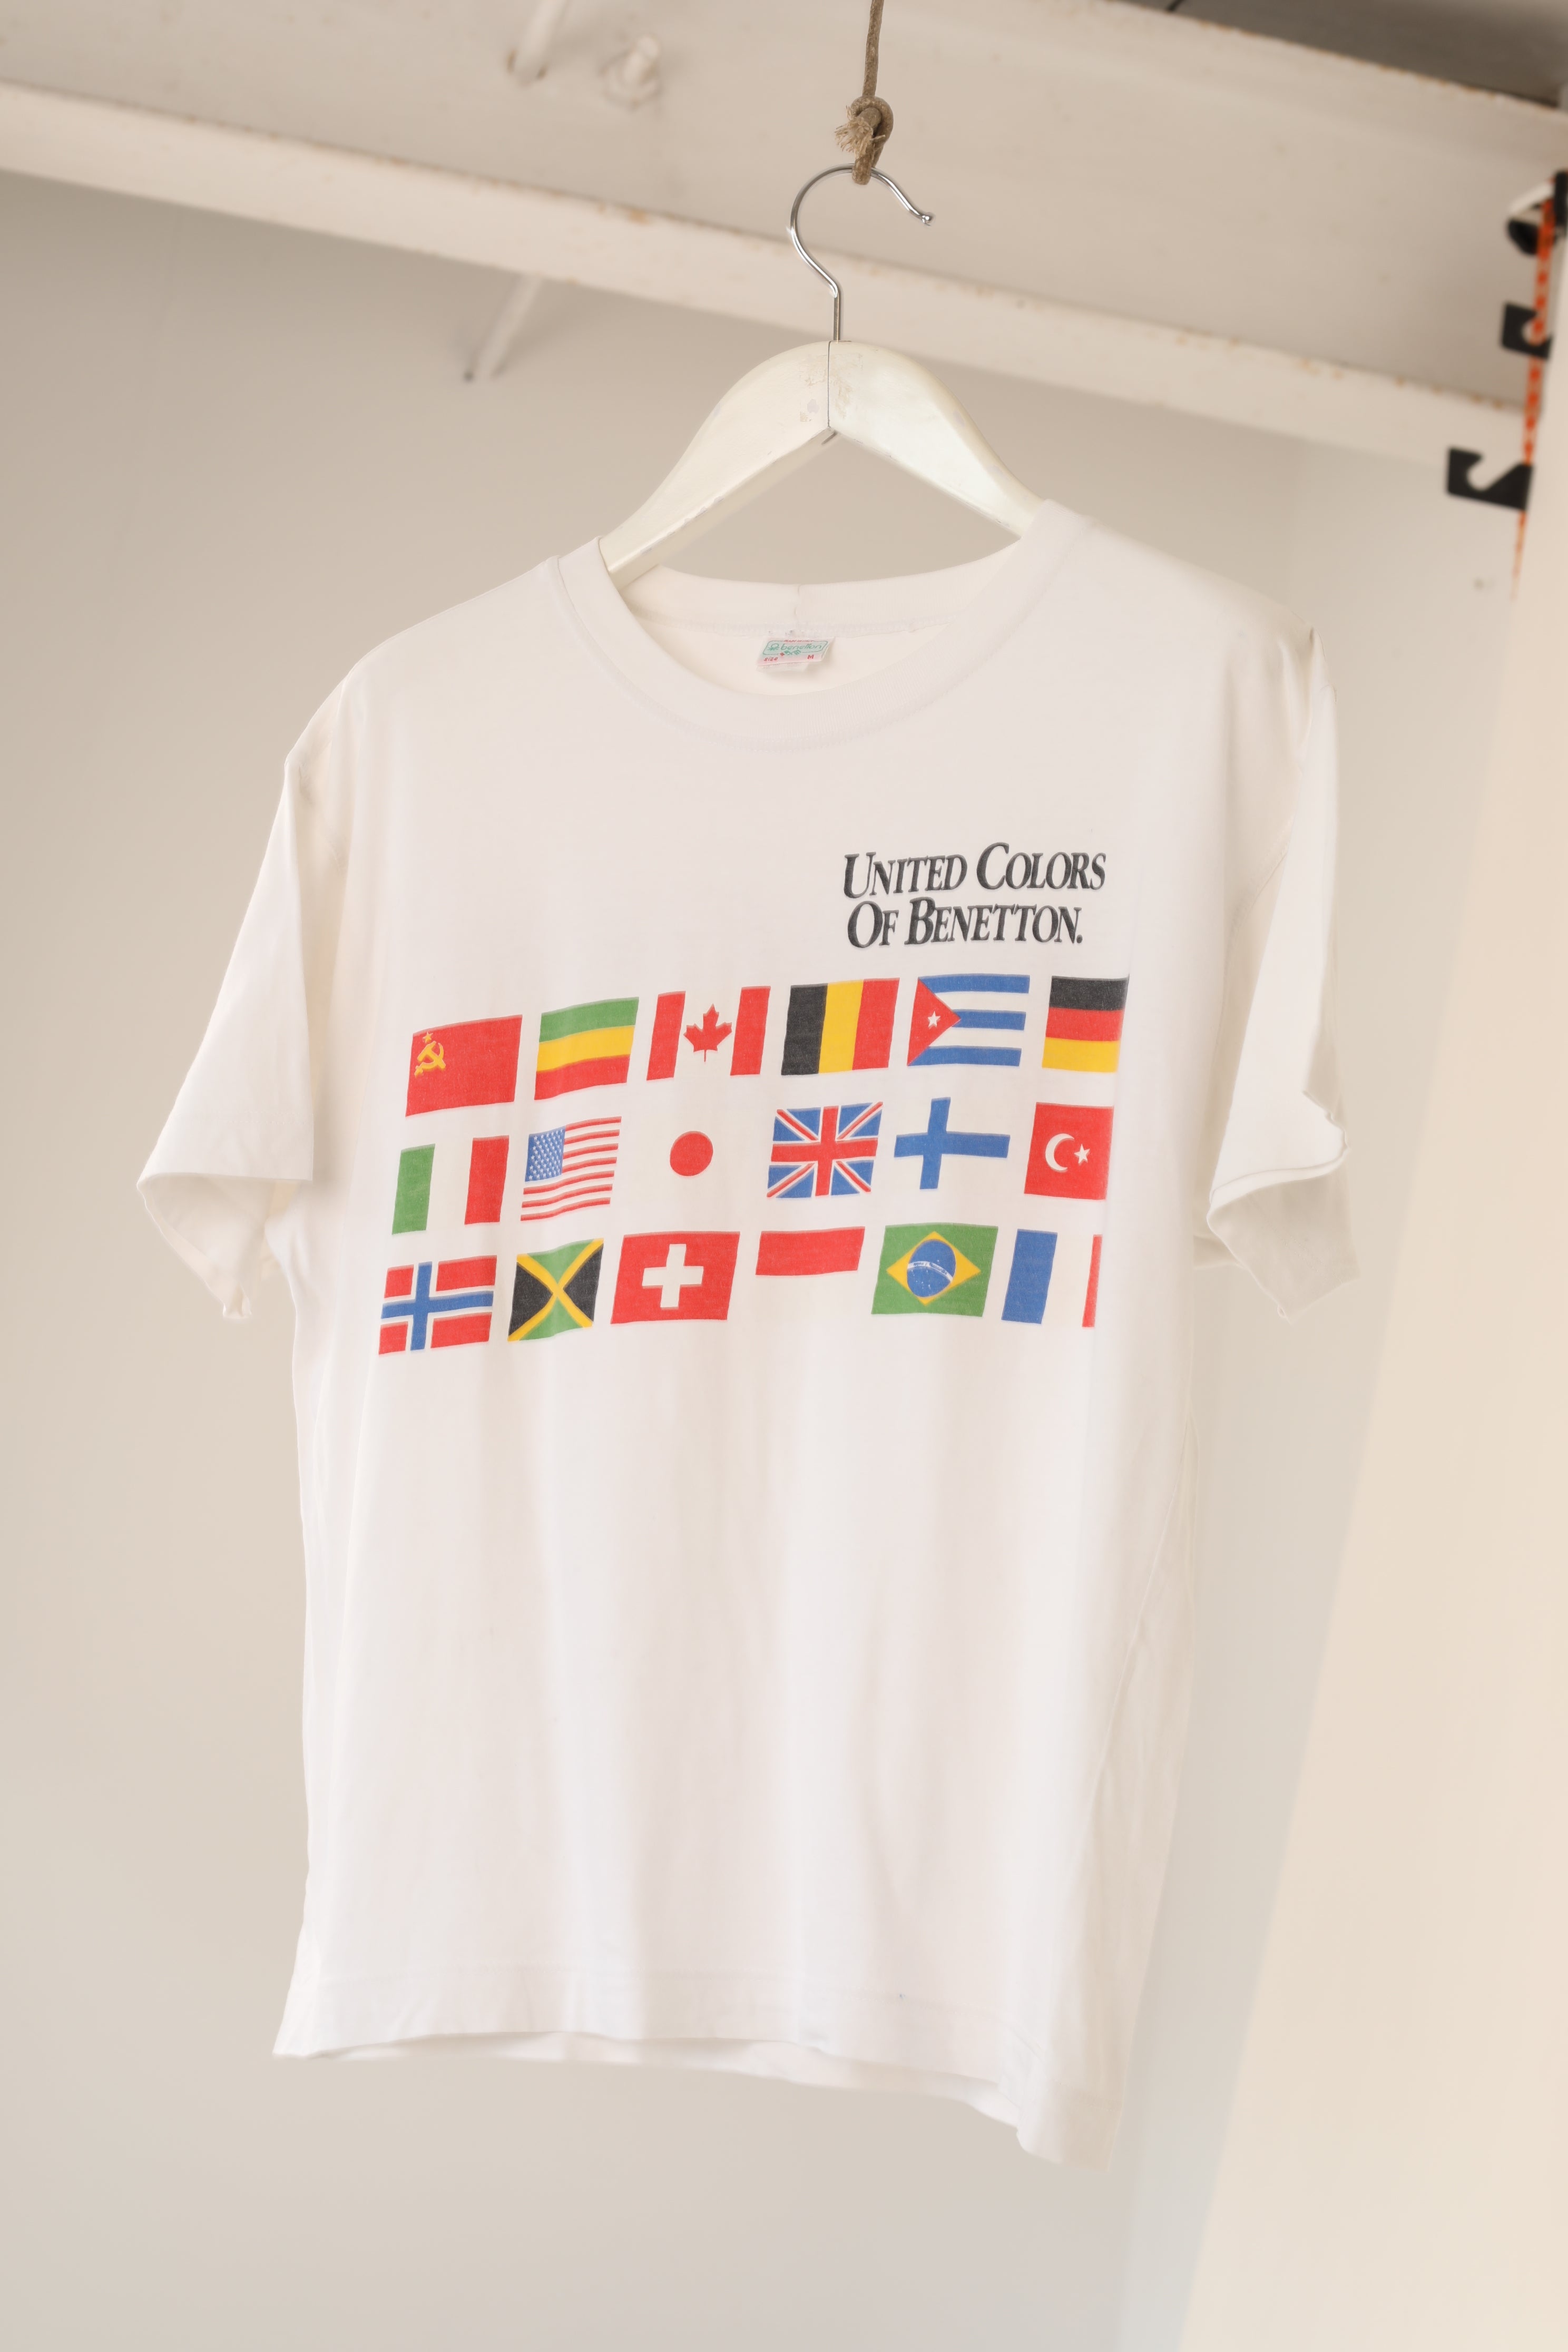 – Benetton workingclassherovintage Flag United Colors T-Shirt of